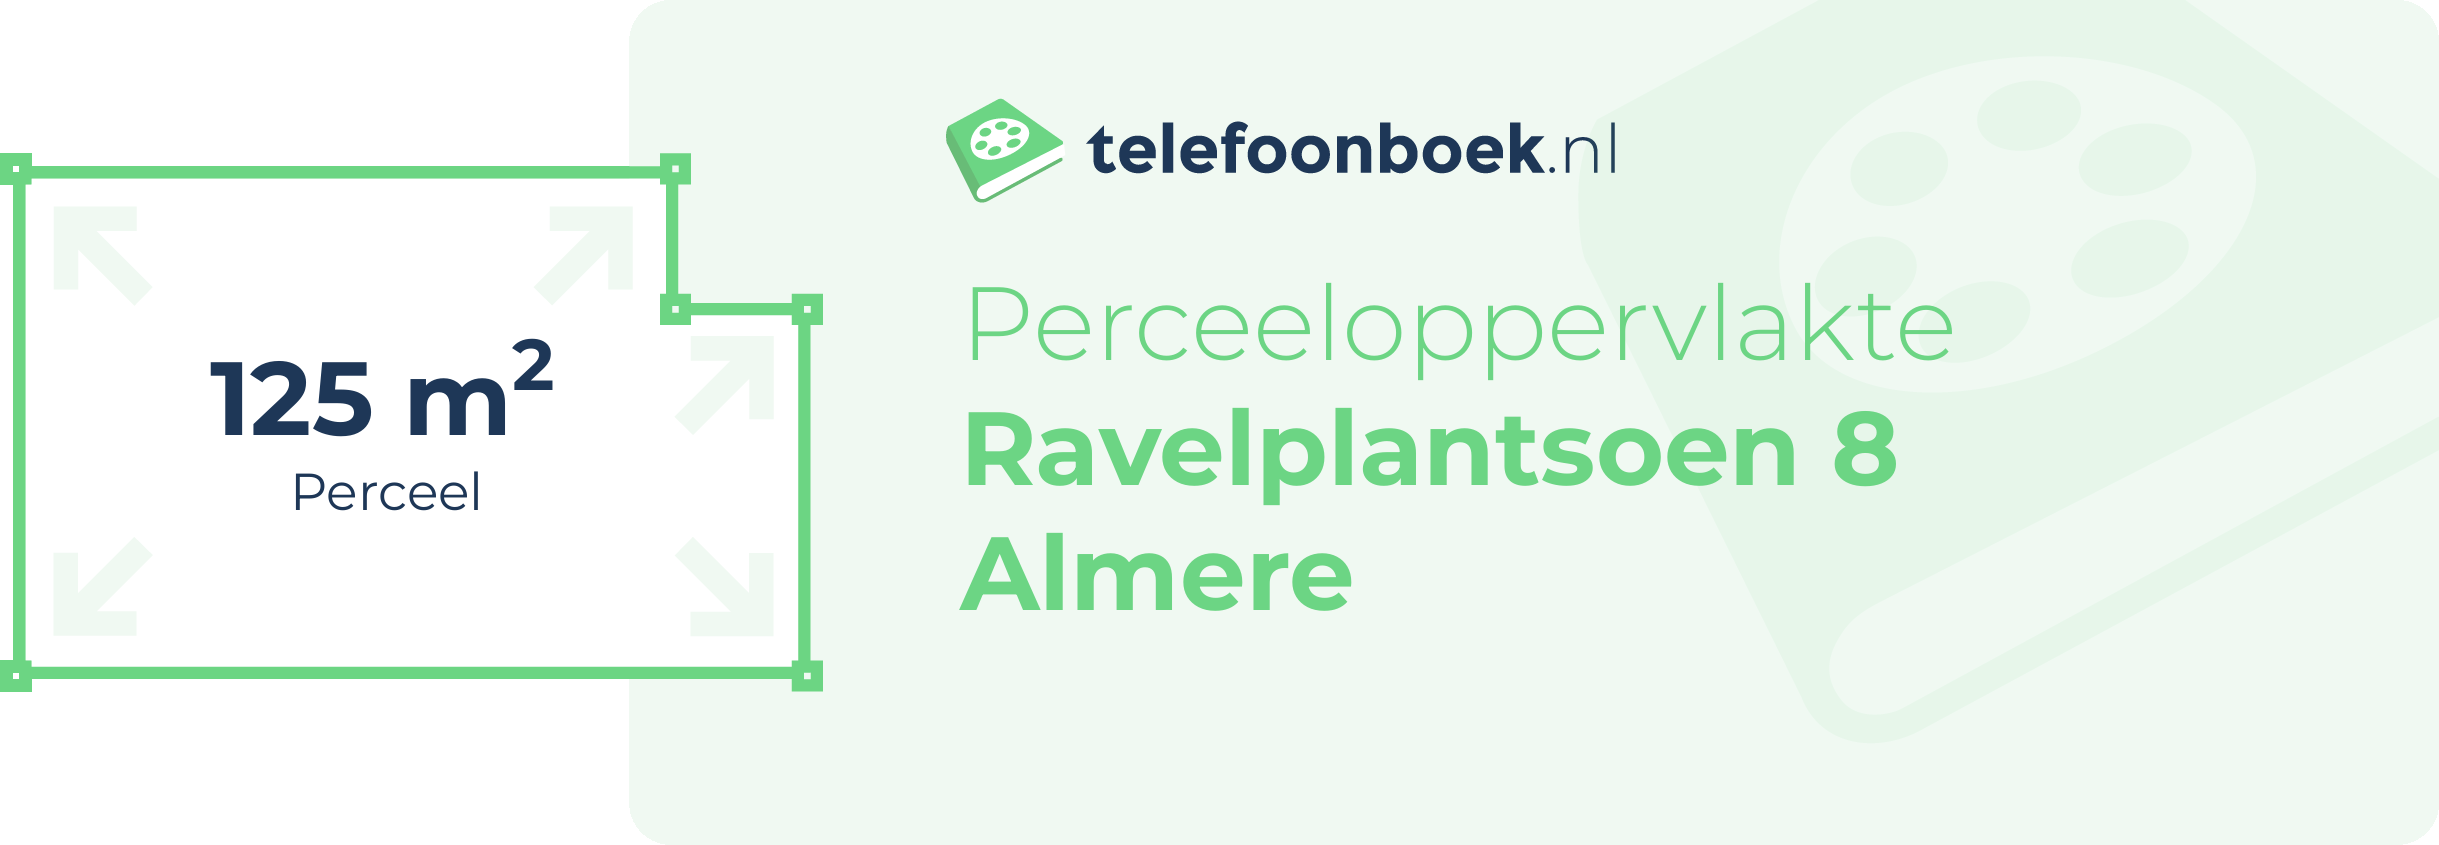 Perceeloppervlakte Ravelplantsoen 8 Almere